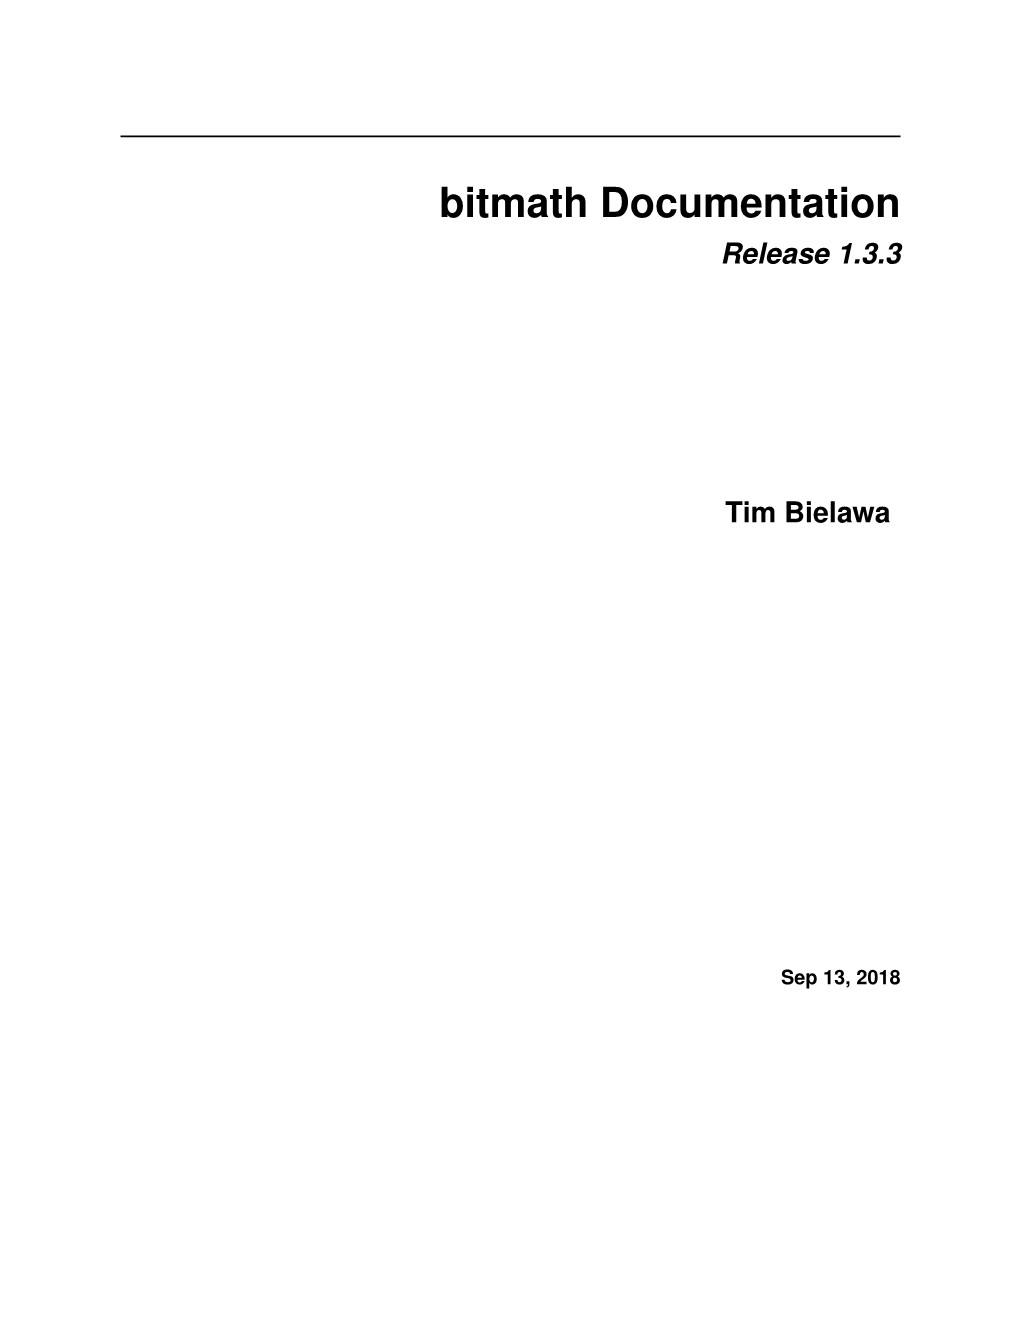 Bitmath Documentation Release 1.3.3